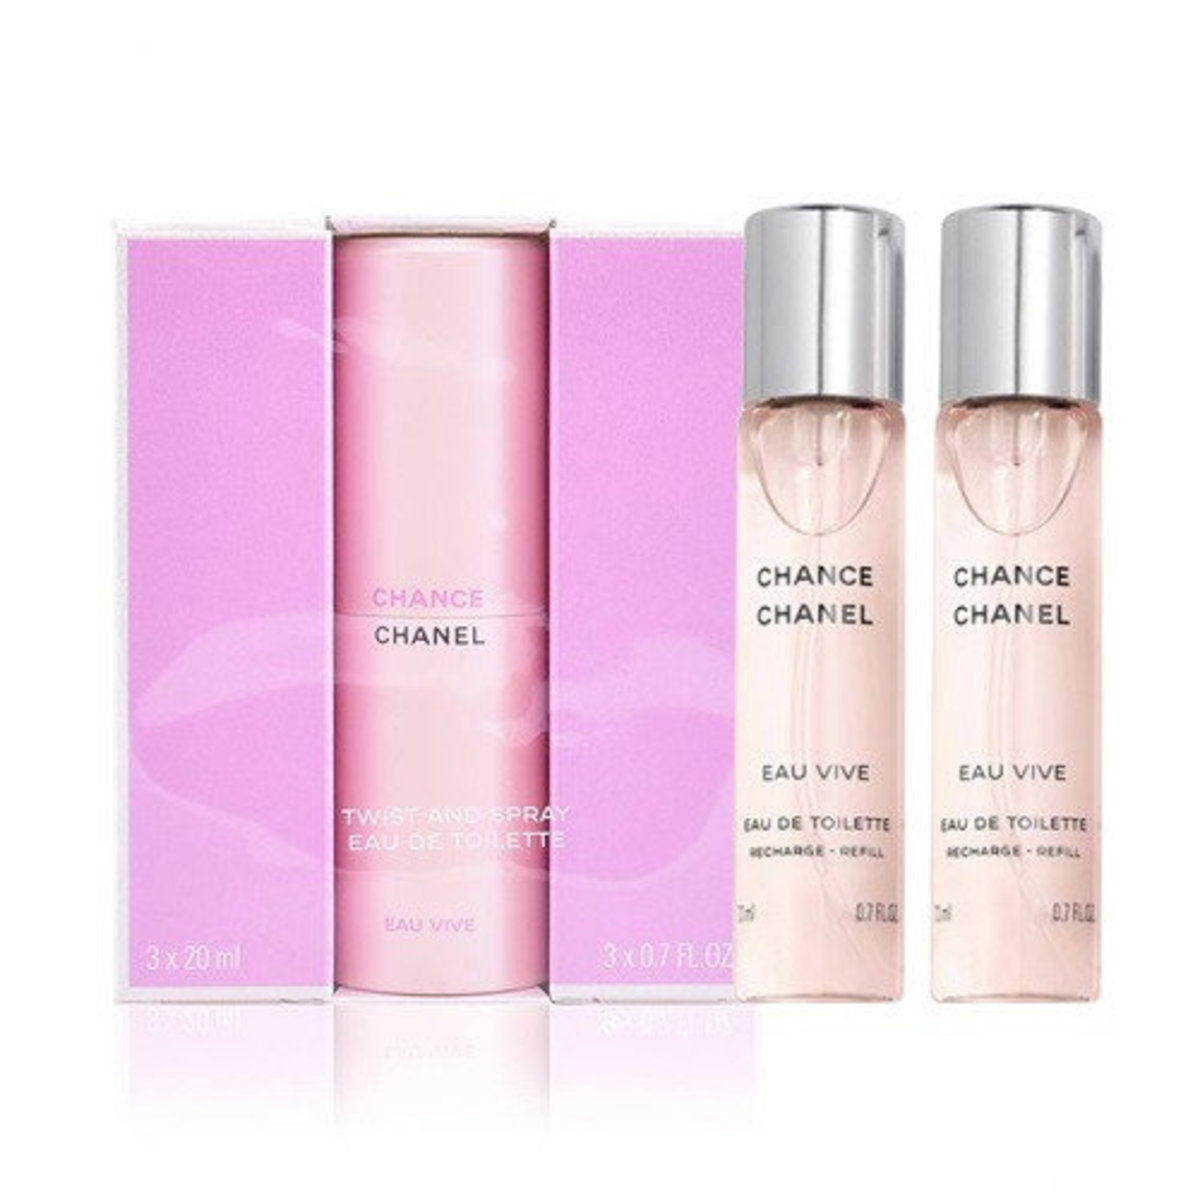 Chanel Chance Eau Vive EDT 3 x 20mL Travel Spray - Perfumes, Fragrances, Gift Sets